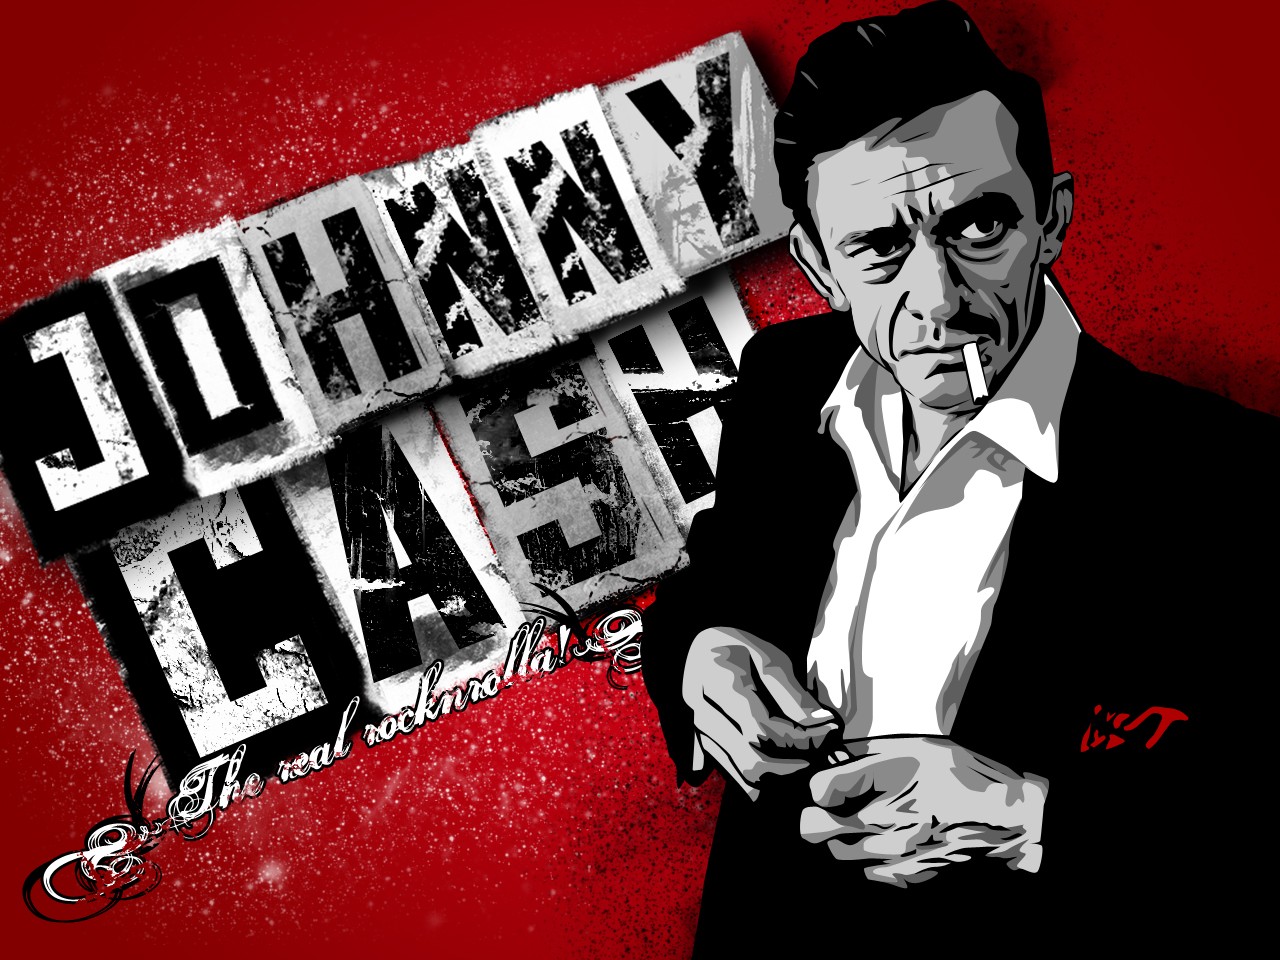 People 1280x960 Johnny Cash music musician red artwork men cigarettes red background celebrity